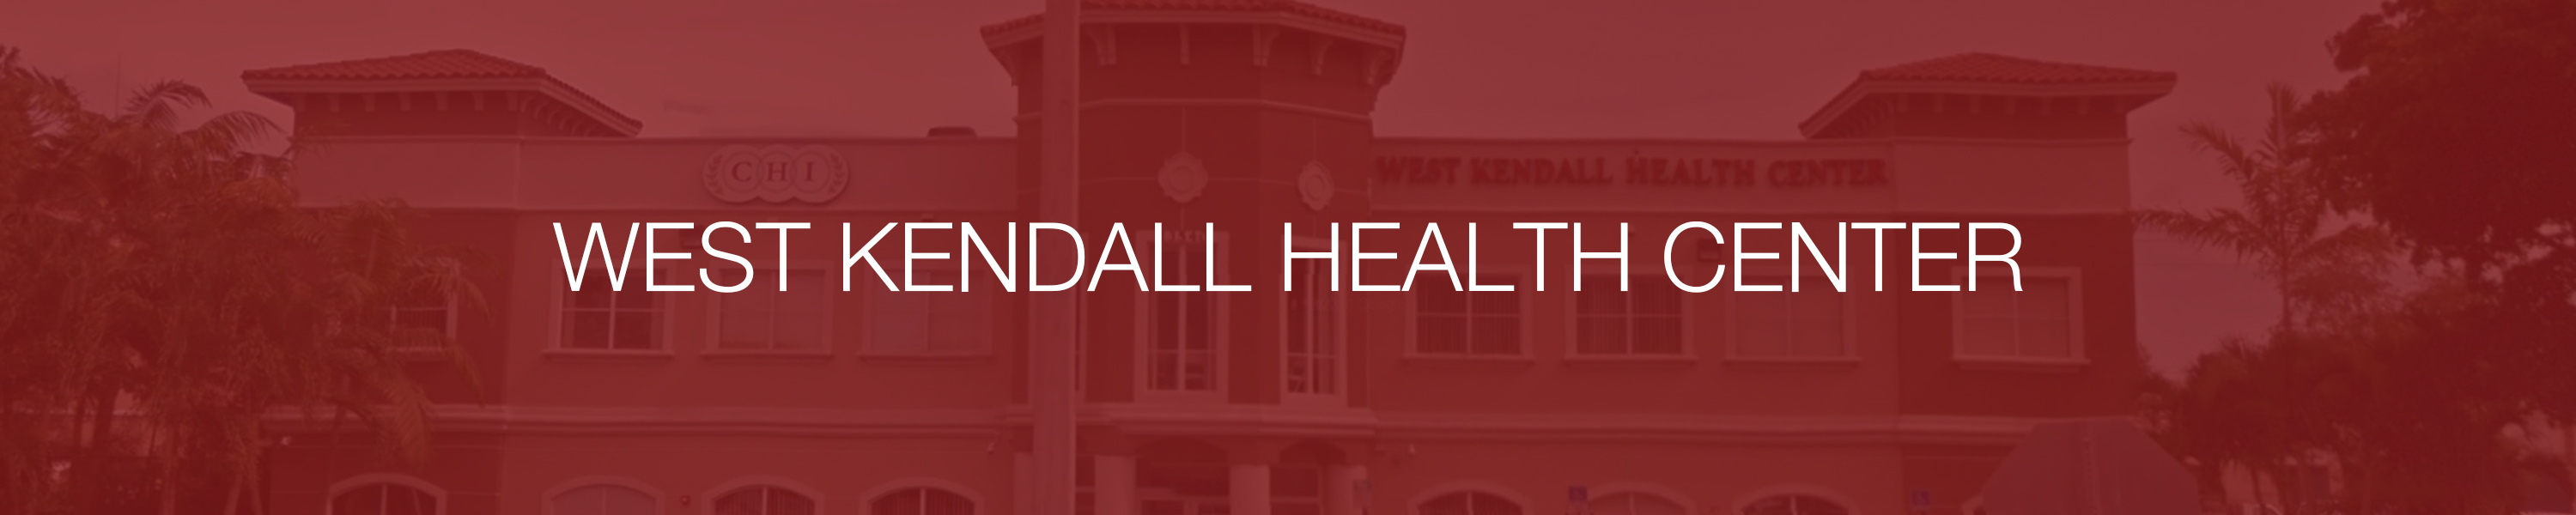 West Kendall Health Center